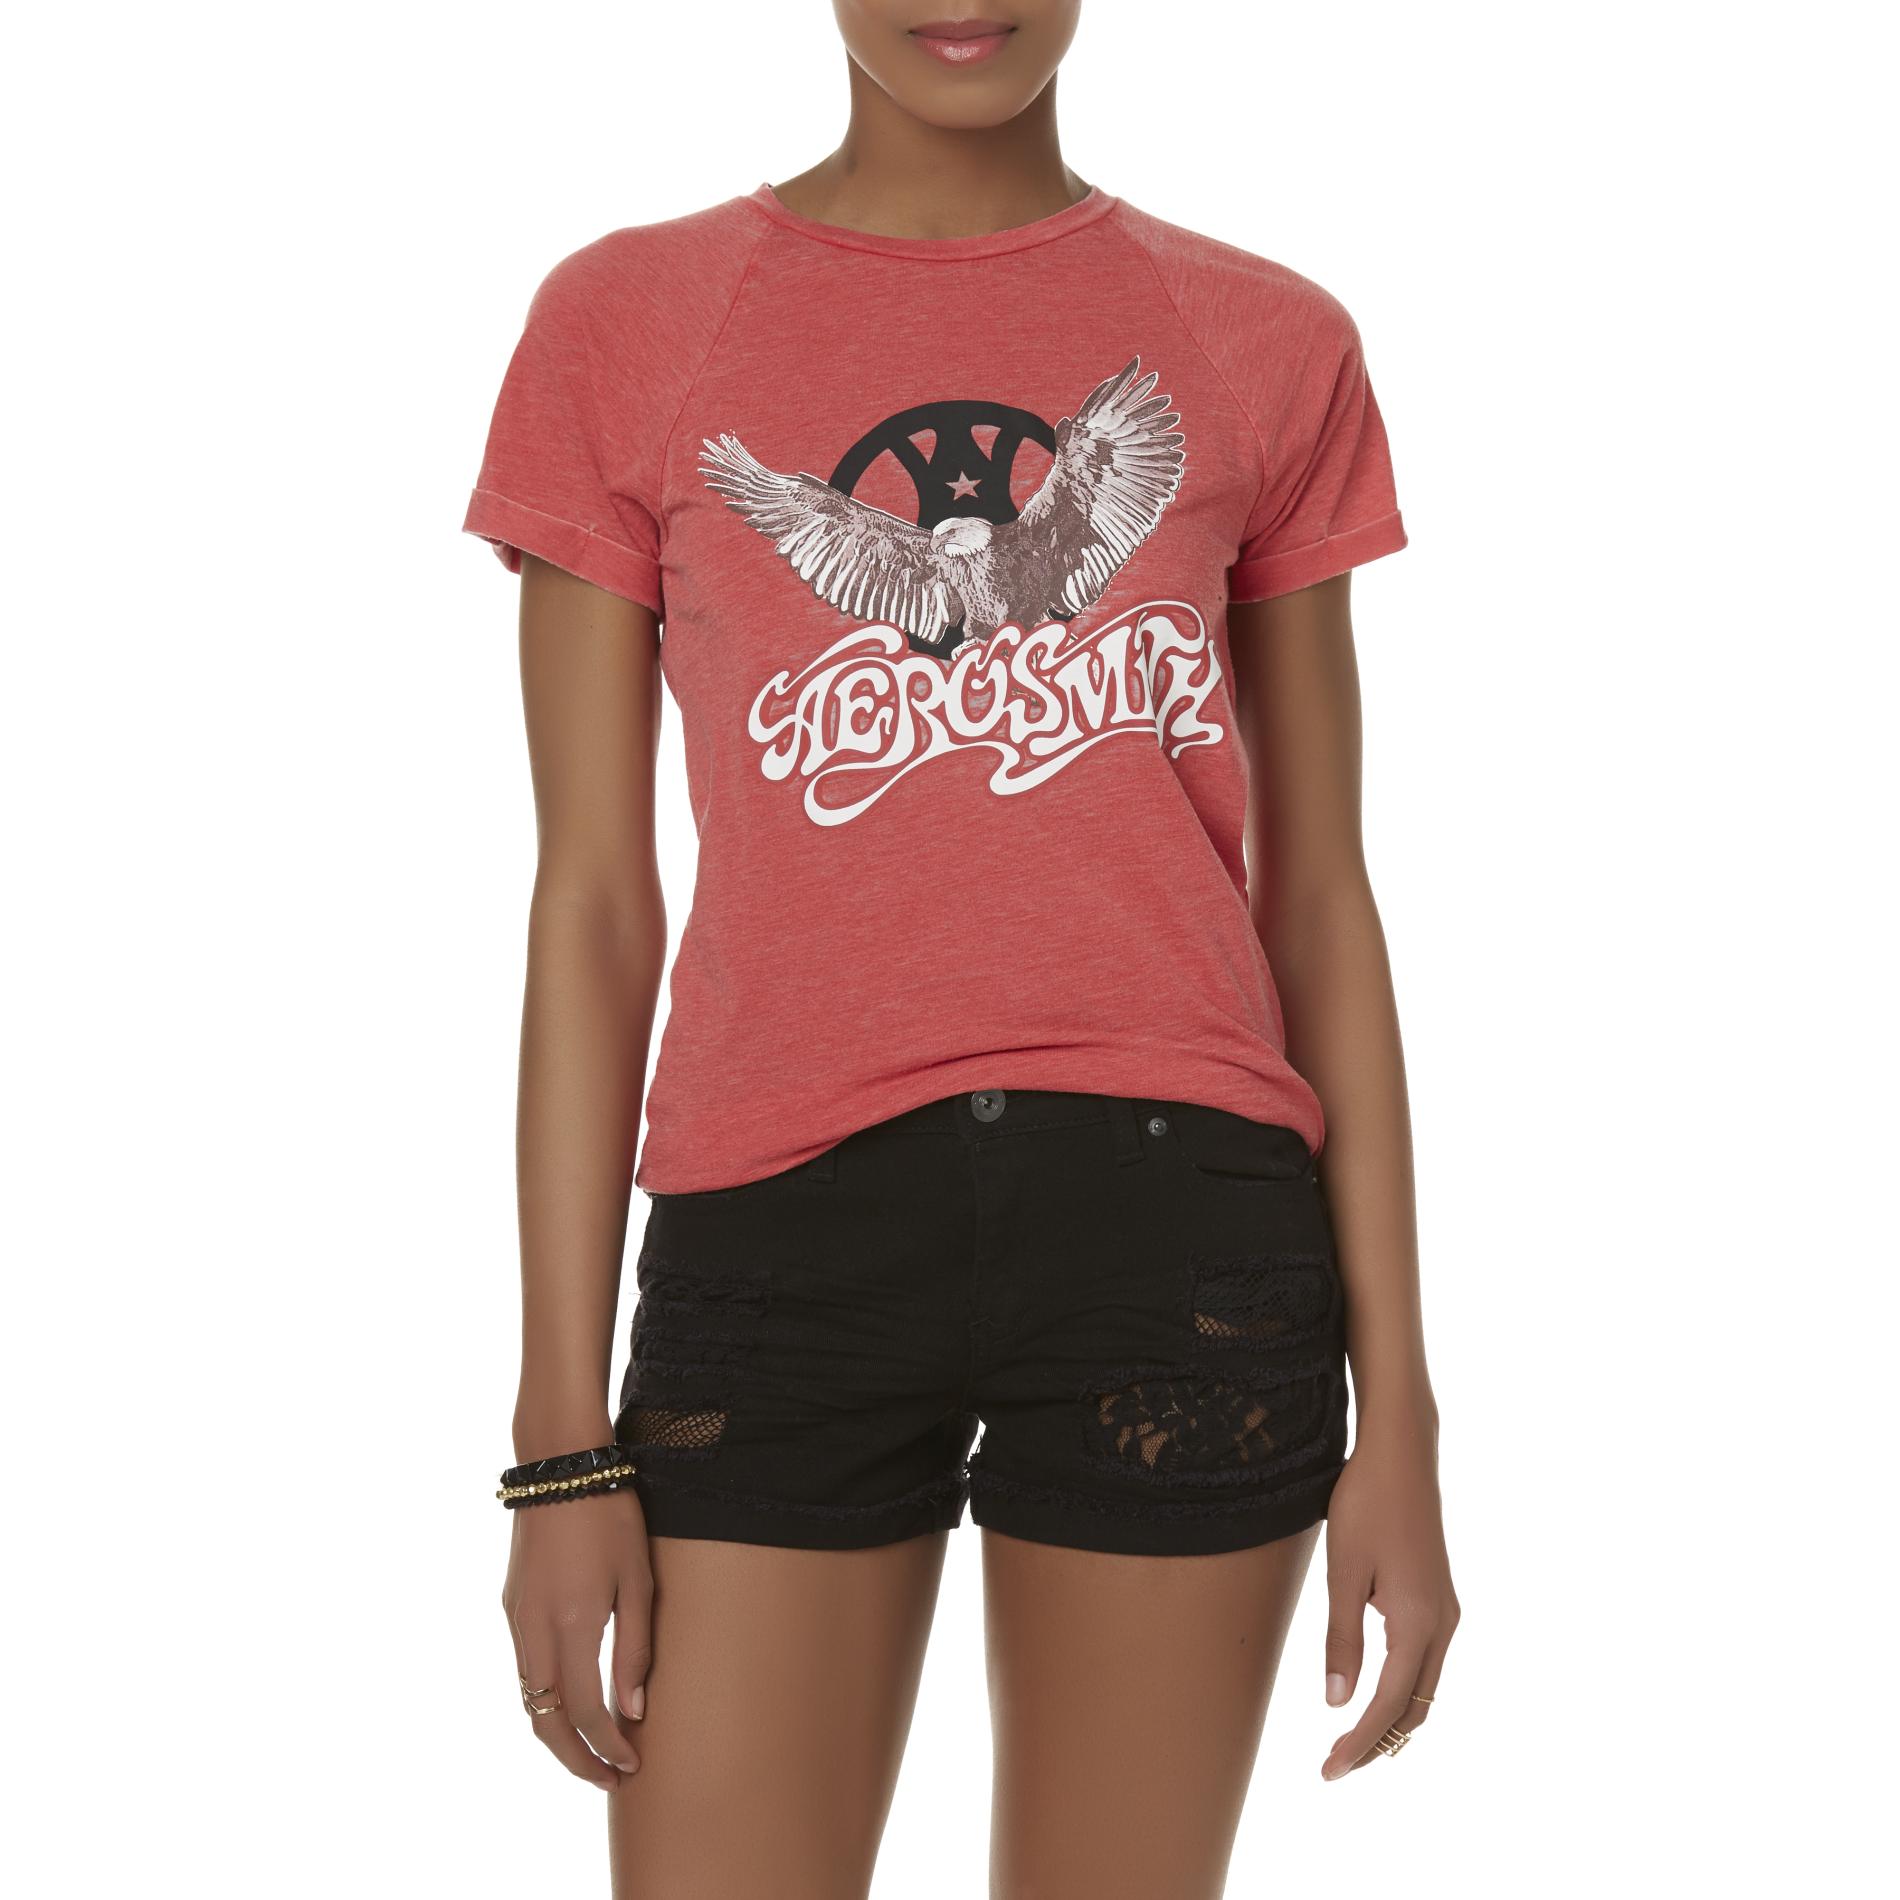 Aerosmith Juniors' Graphic Burnout T-Shirt - Eagle Logo